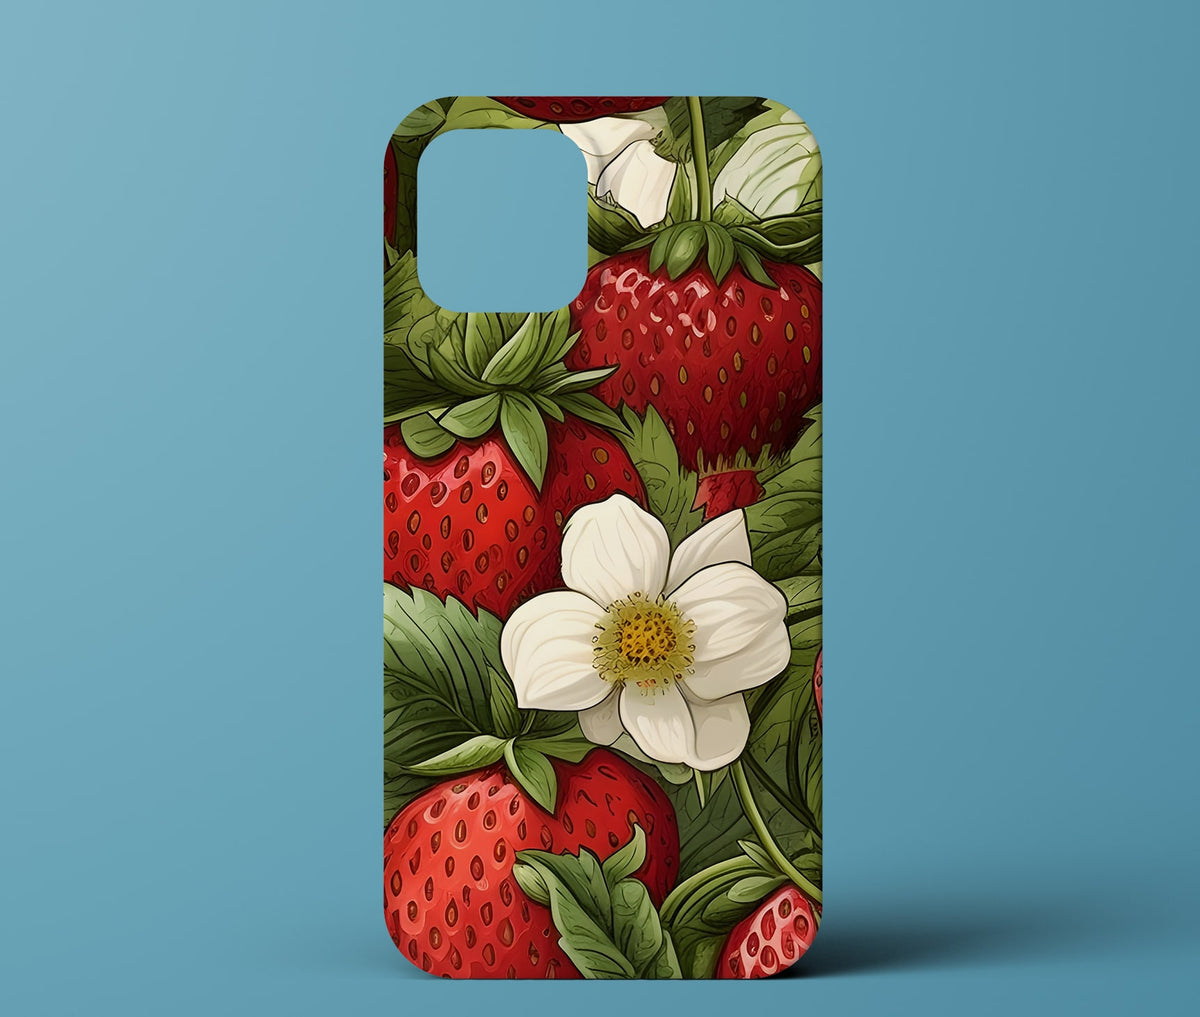 Strawberry Phone Case